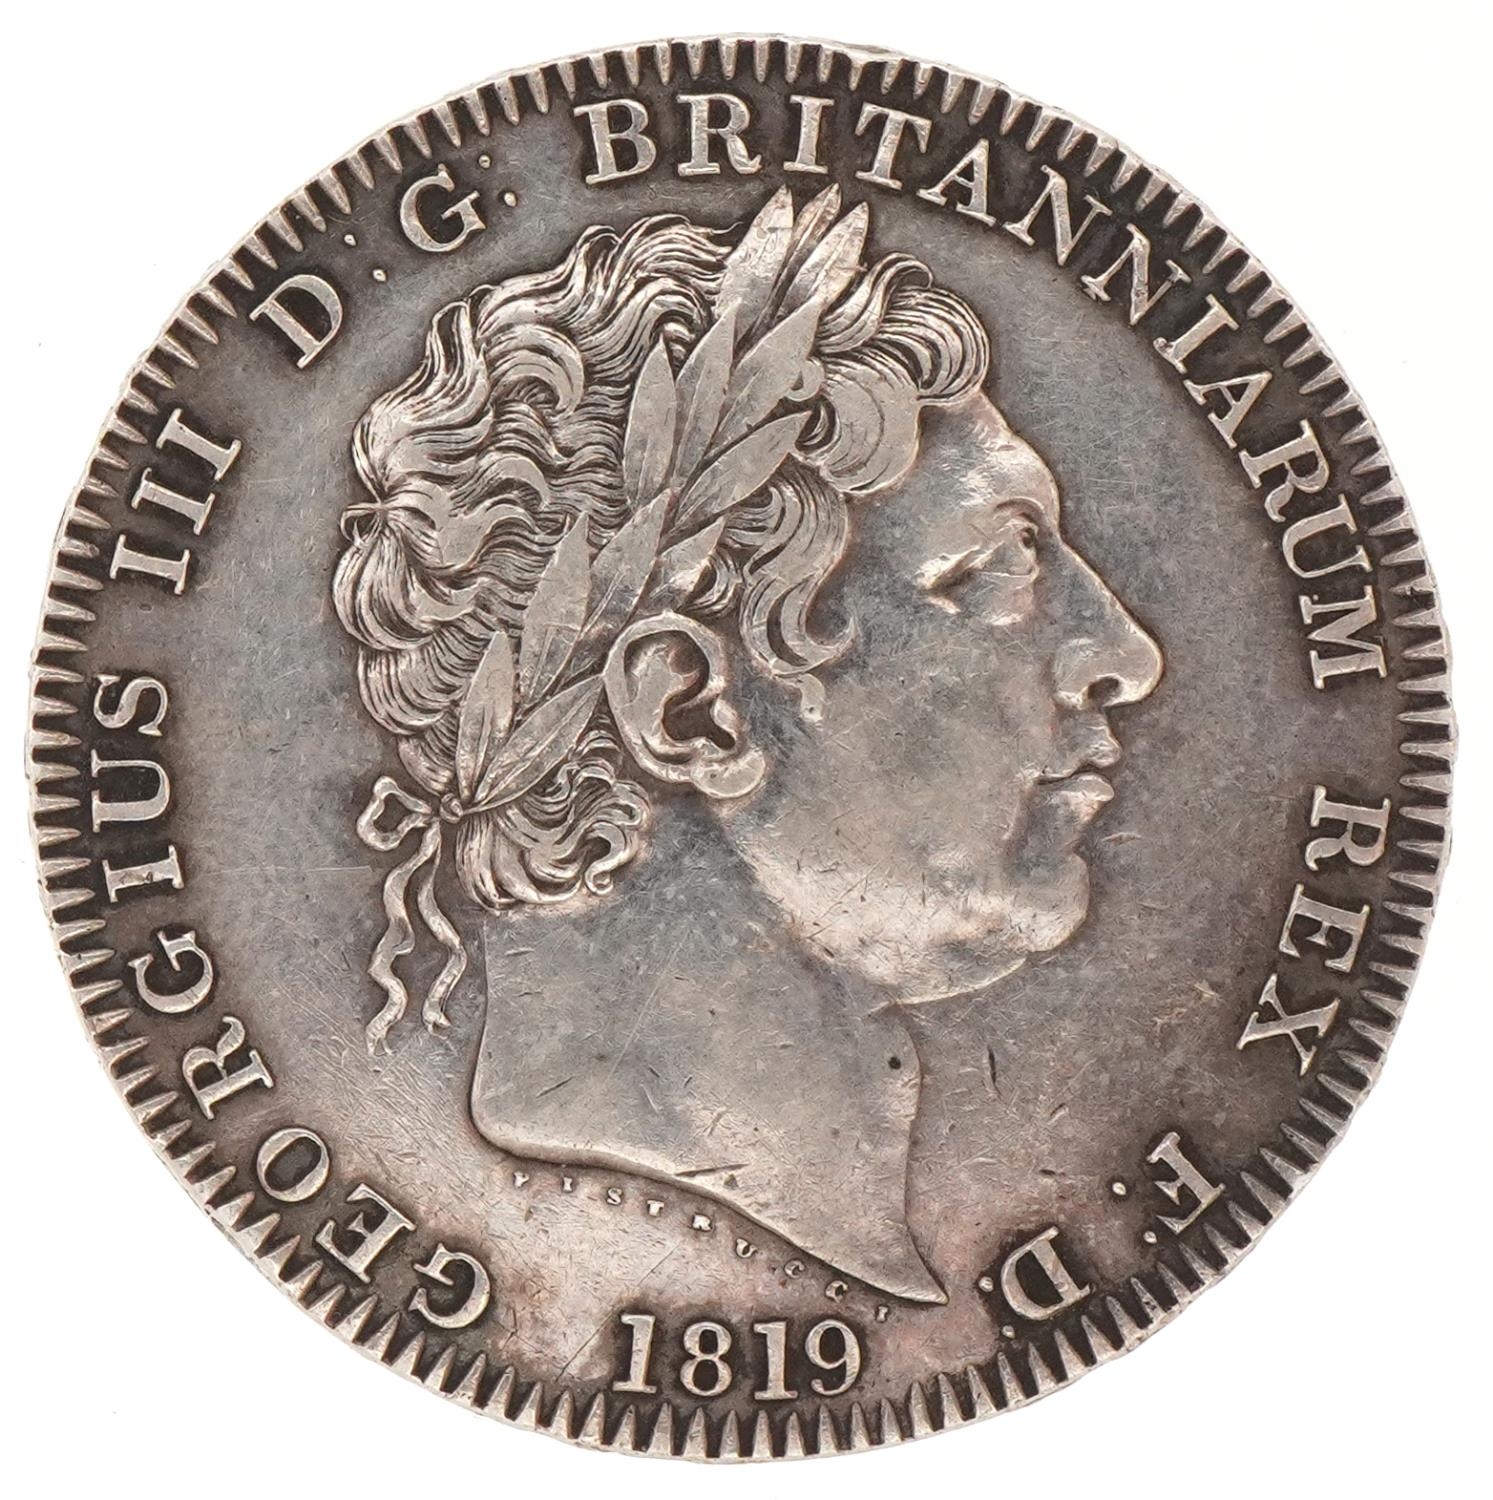 George III silver crown dated 1819